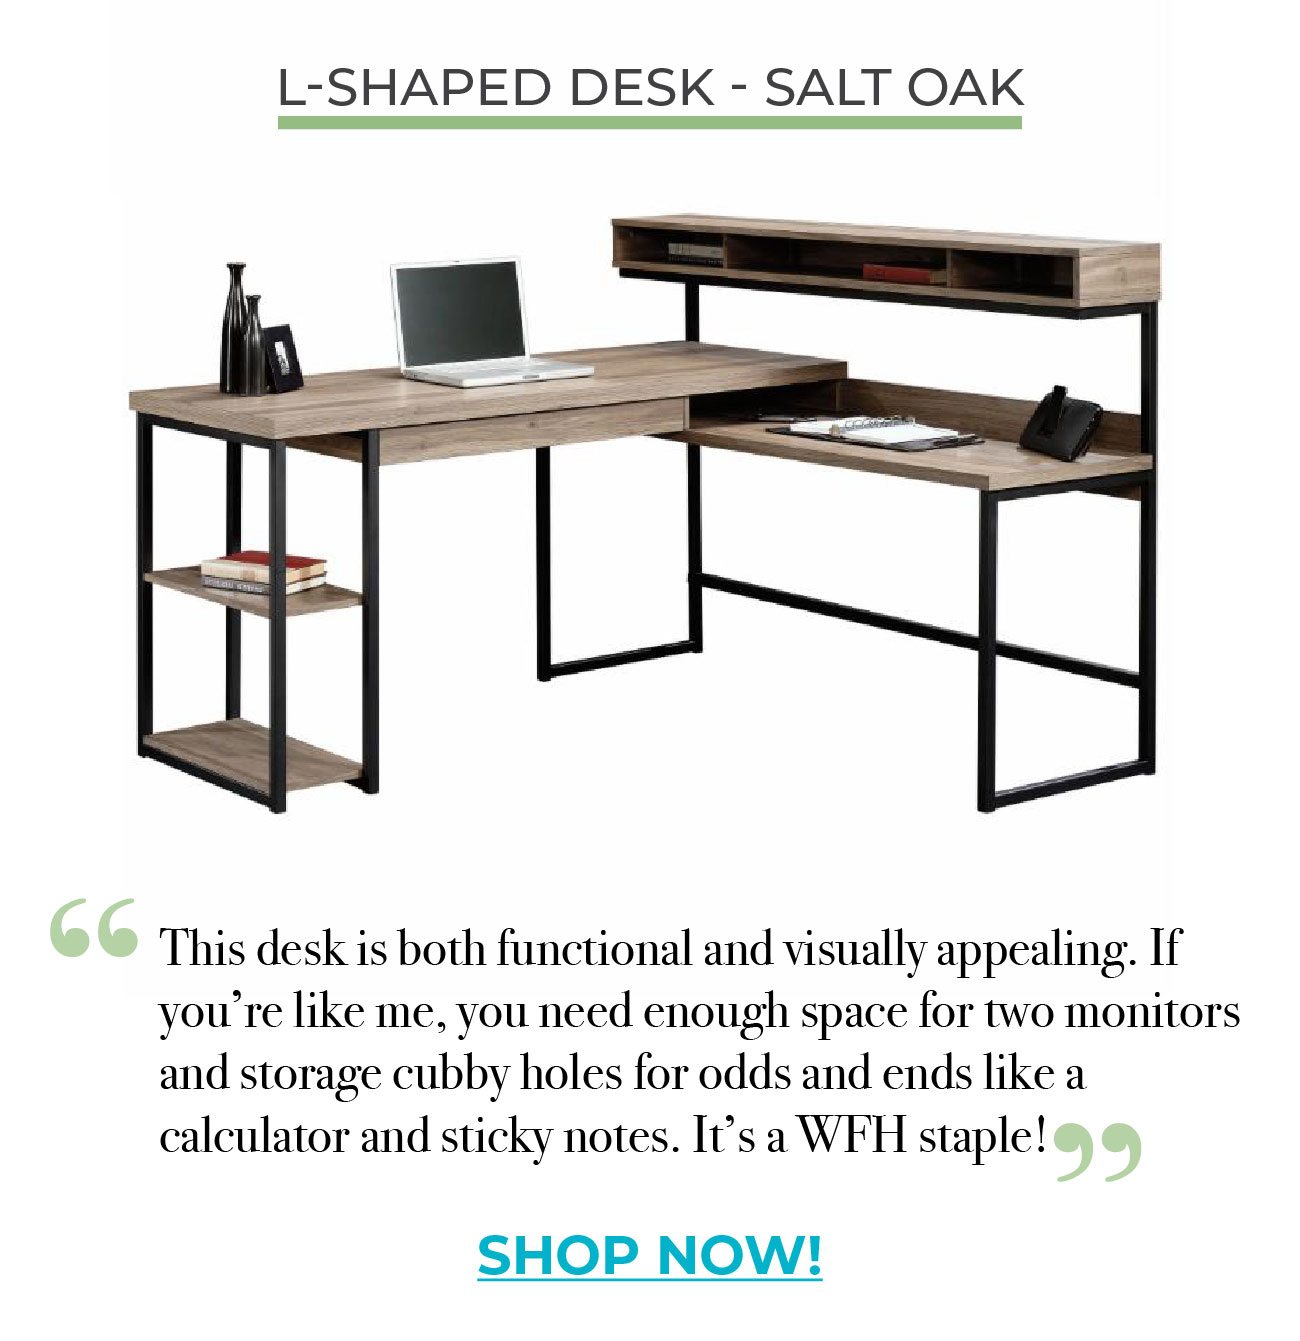 L-Shaped Desk - Salt Oak